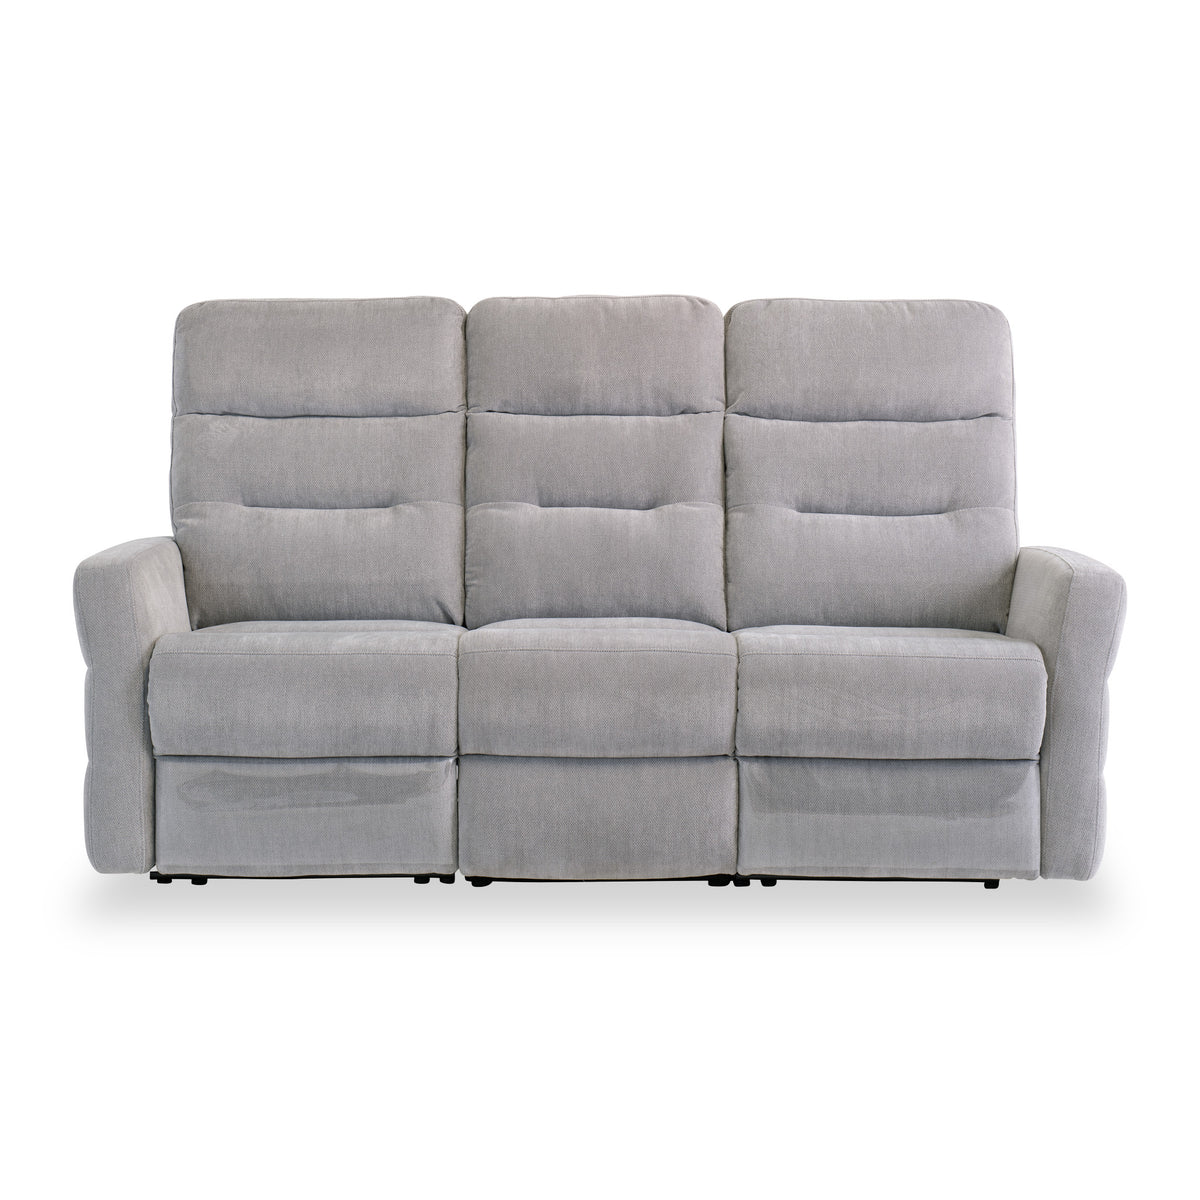 Dalton Silver Grey Fabric Electric Reclining 3 Seater Sofa from Roseland Furniture